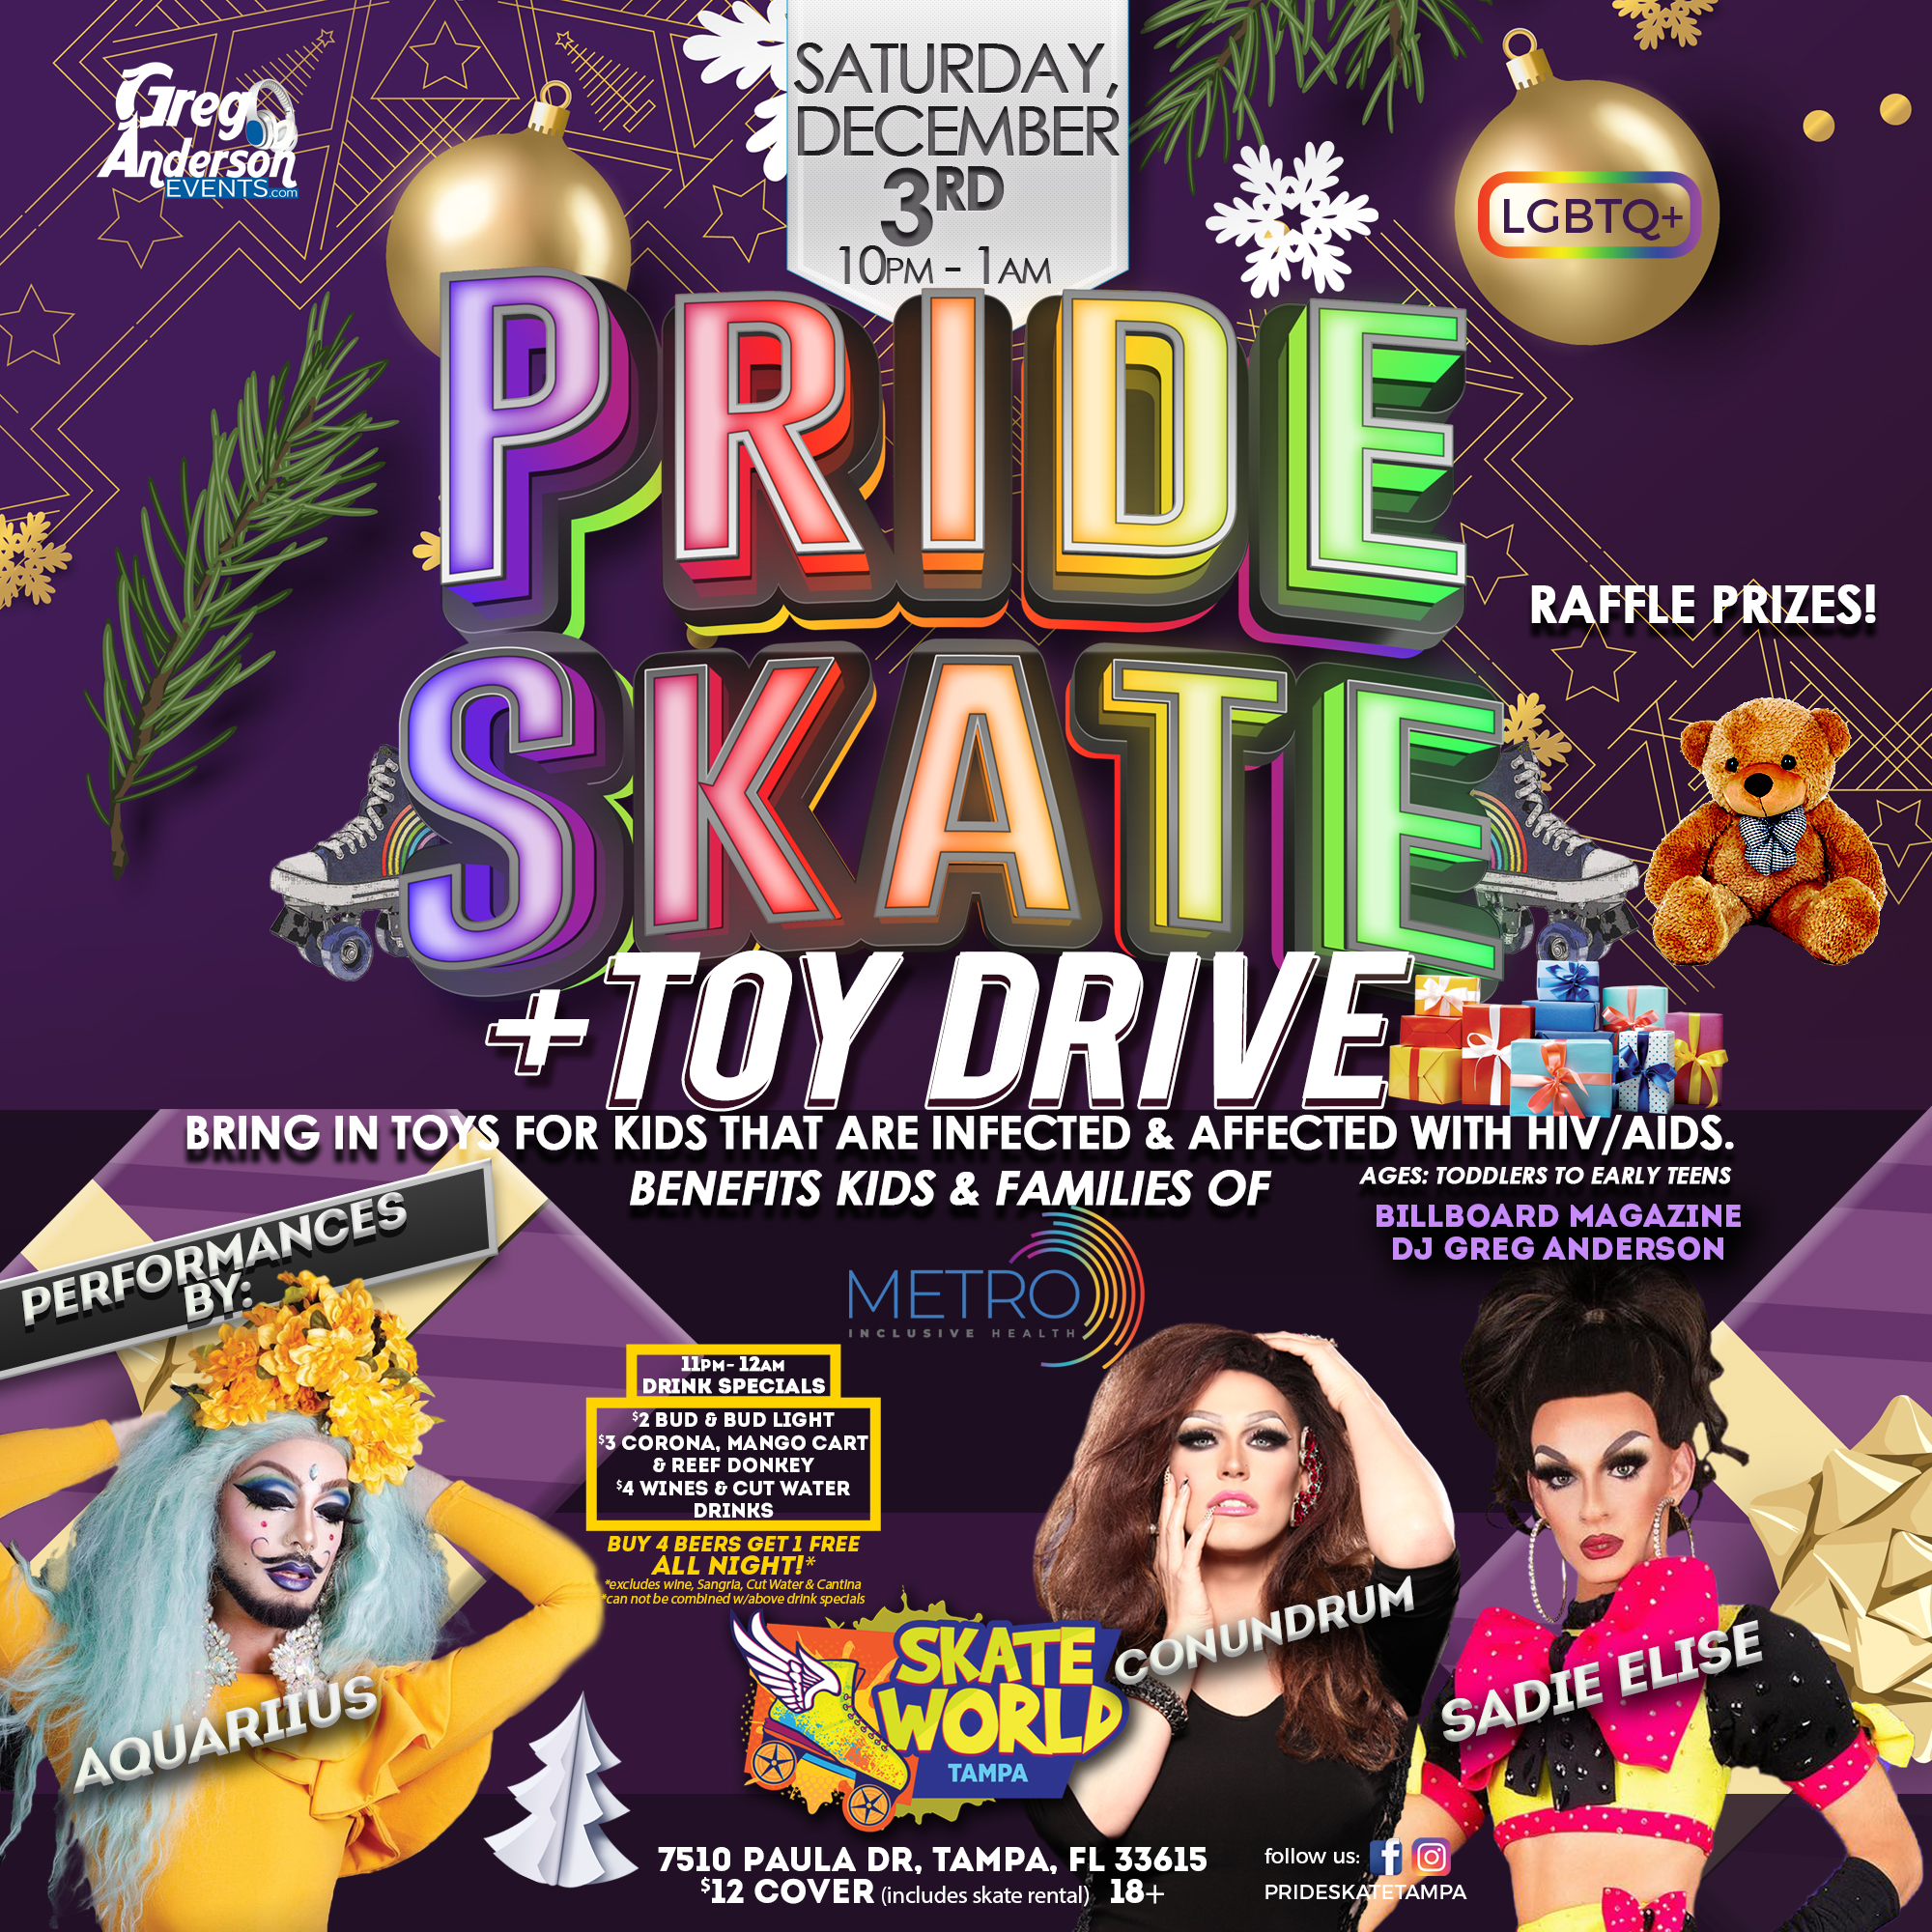 Pride Skate toy drive at skate world